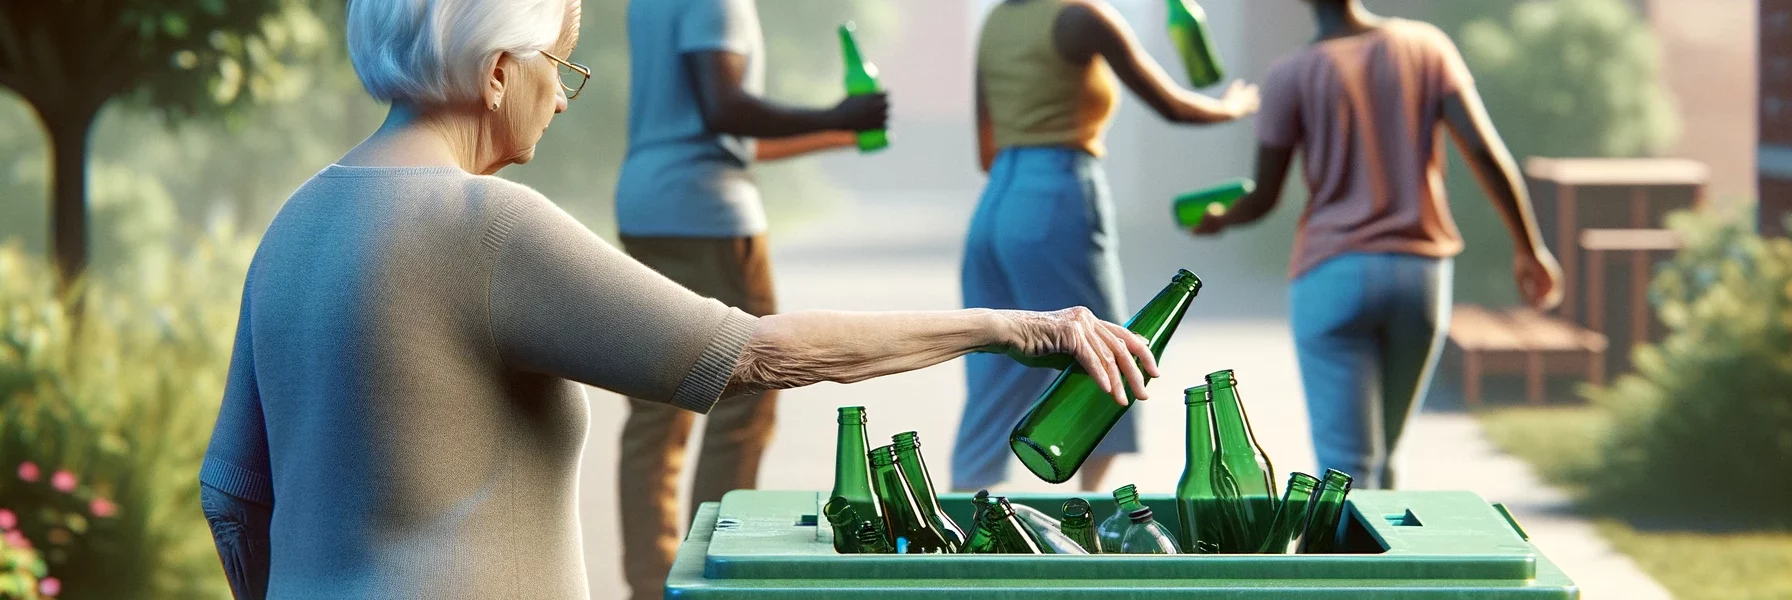 Recyclage bouteilles en verre